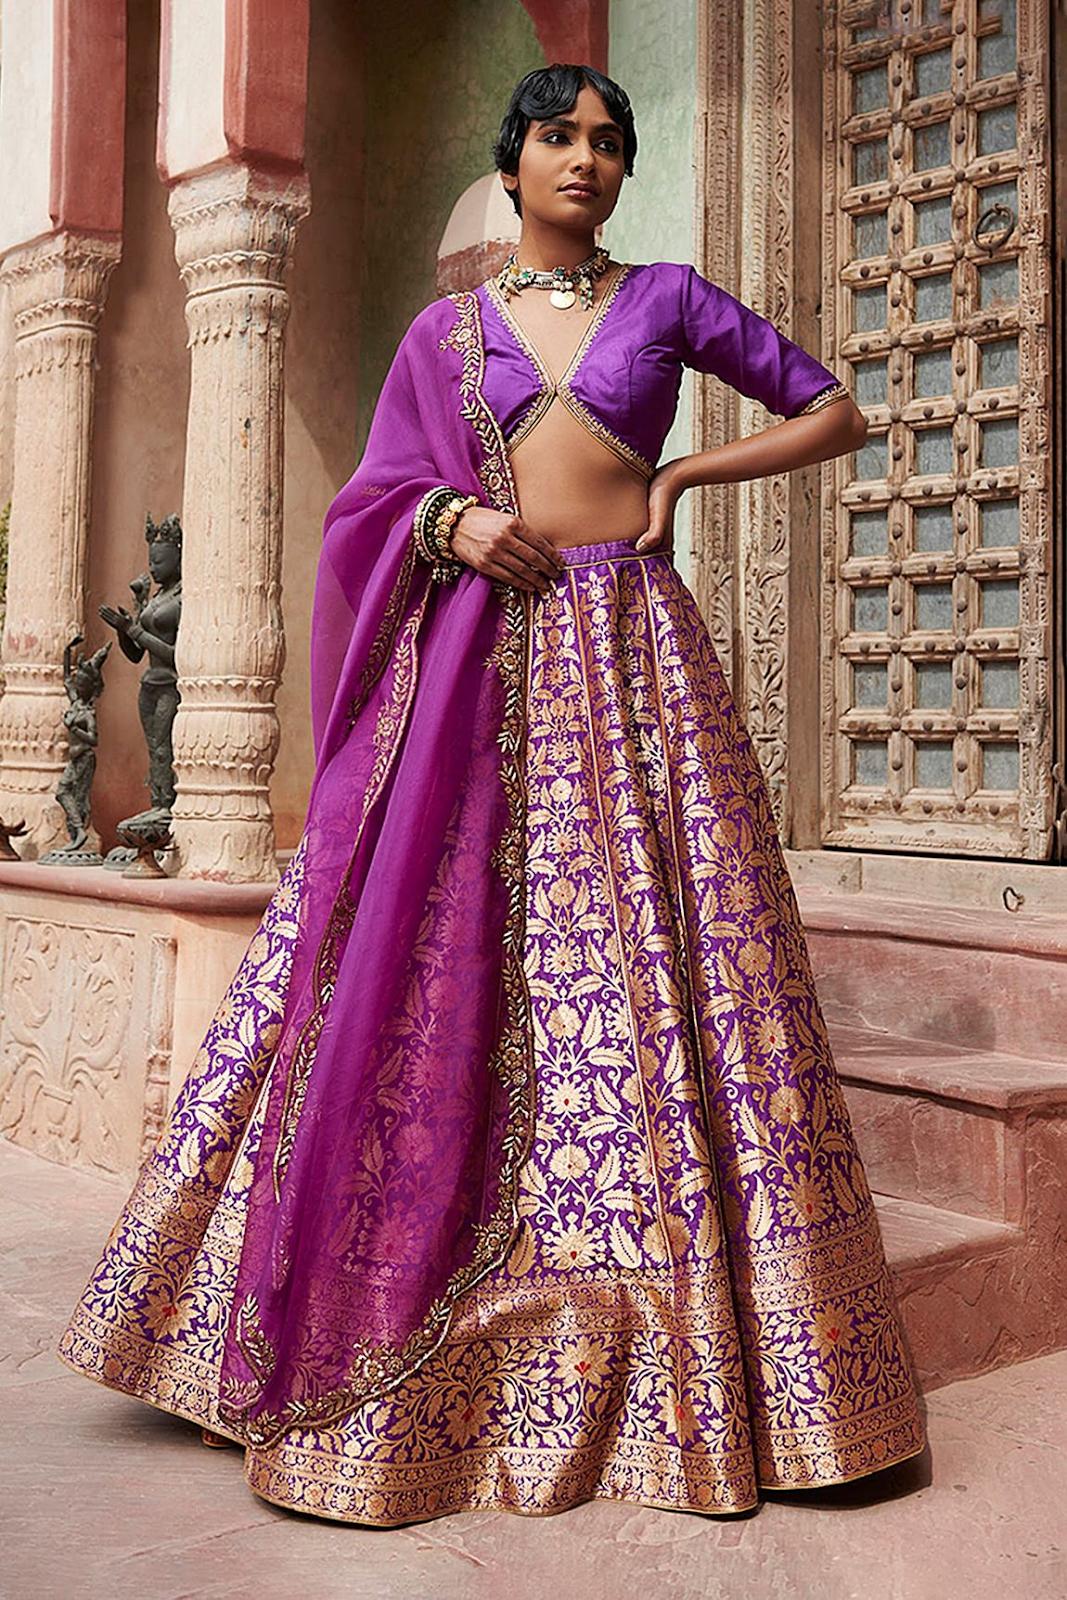 VAMA Designs Indian Bridal Couture - Dress & Attire - San Jose, CA -  WeddingWire